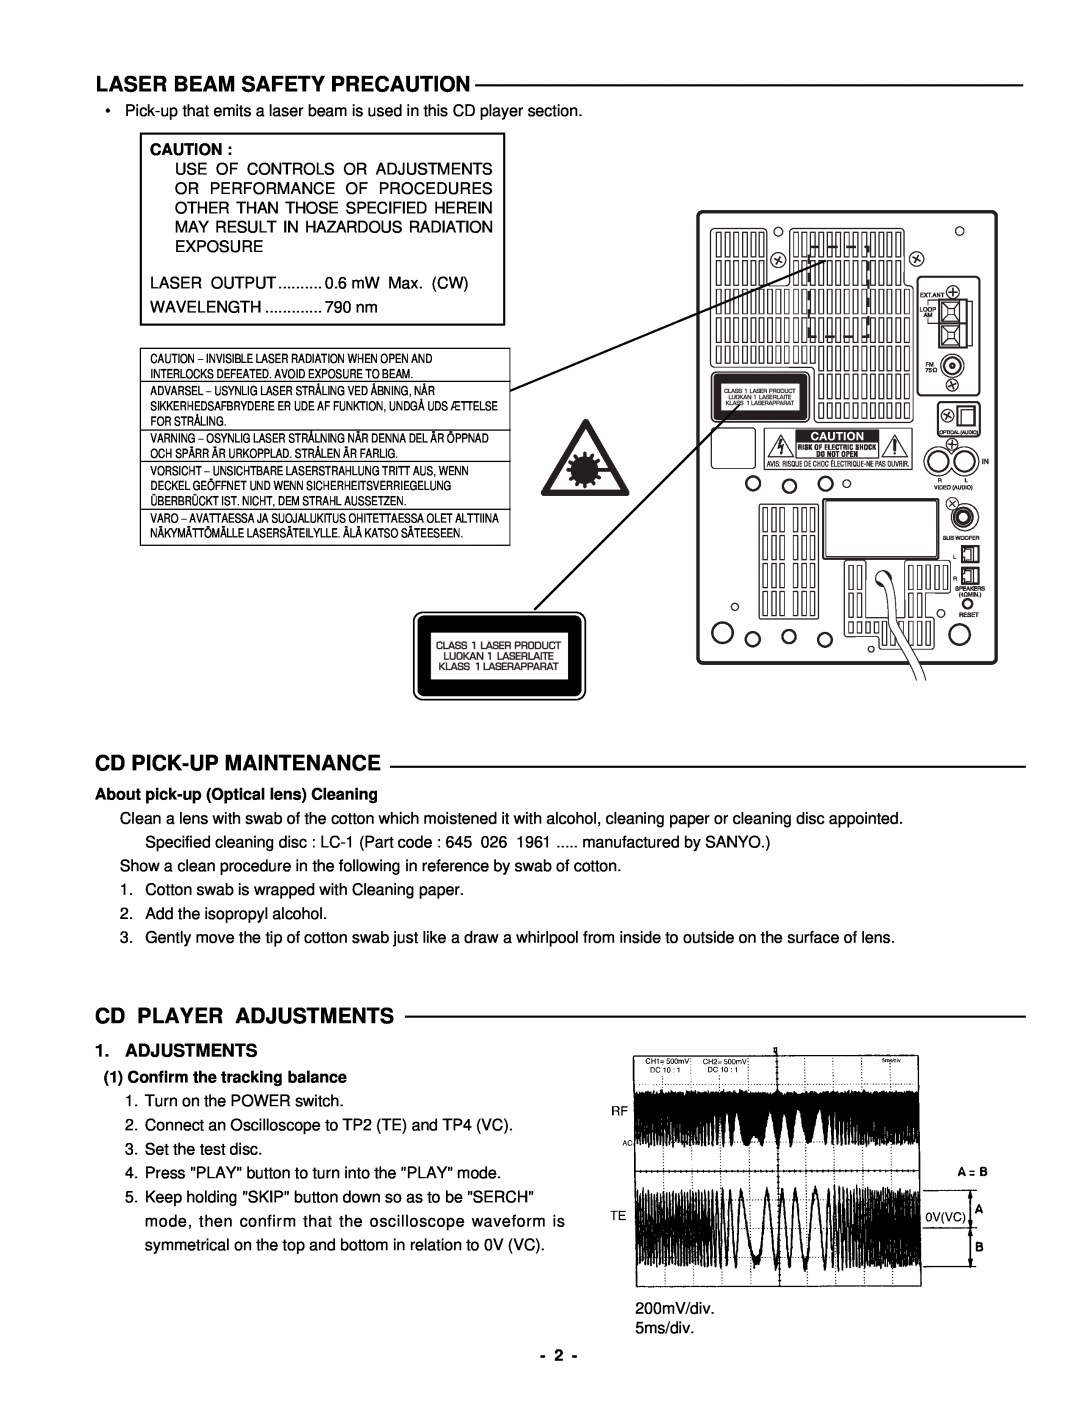 Sanyo DC-DA370 Laser Beam Safety Precaution, Cd Pick-Upmaintenance, Cd Player Adjustments, 1Confirm the tracking balance 